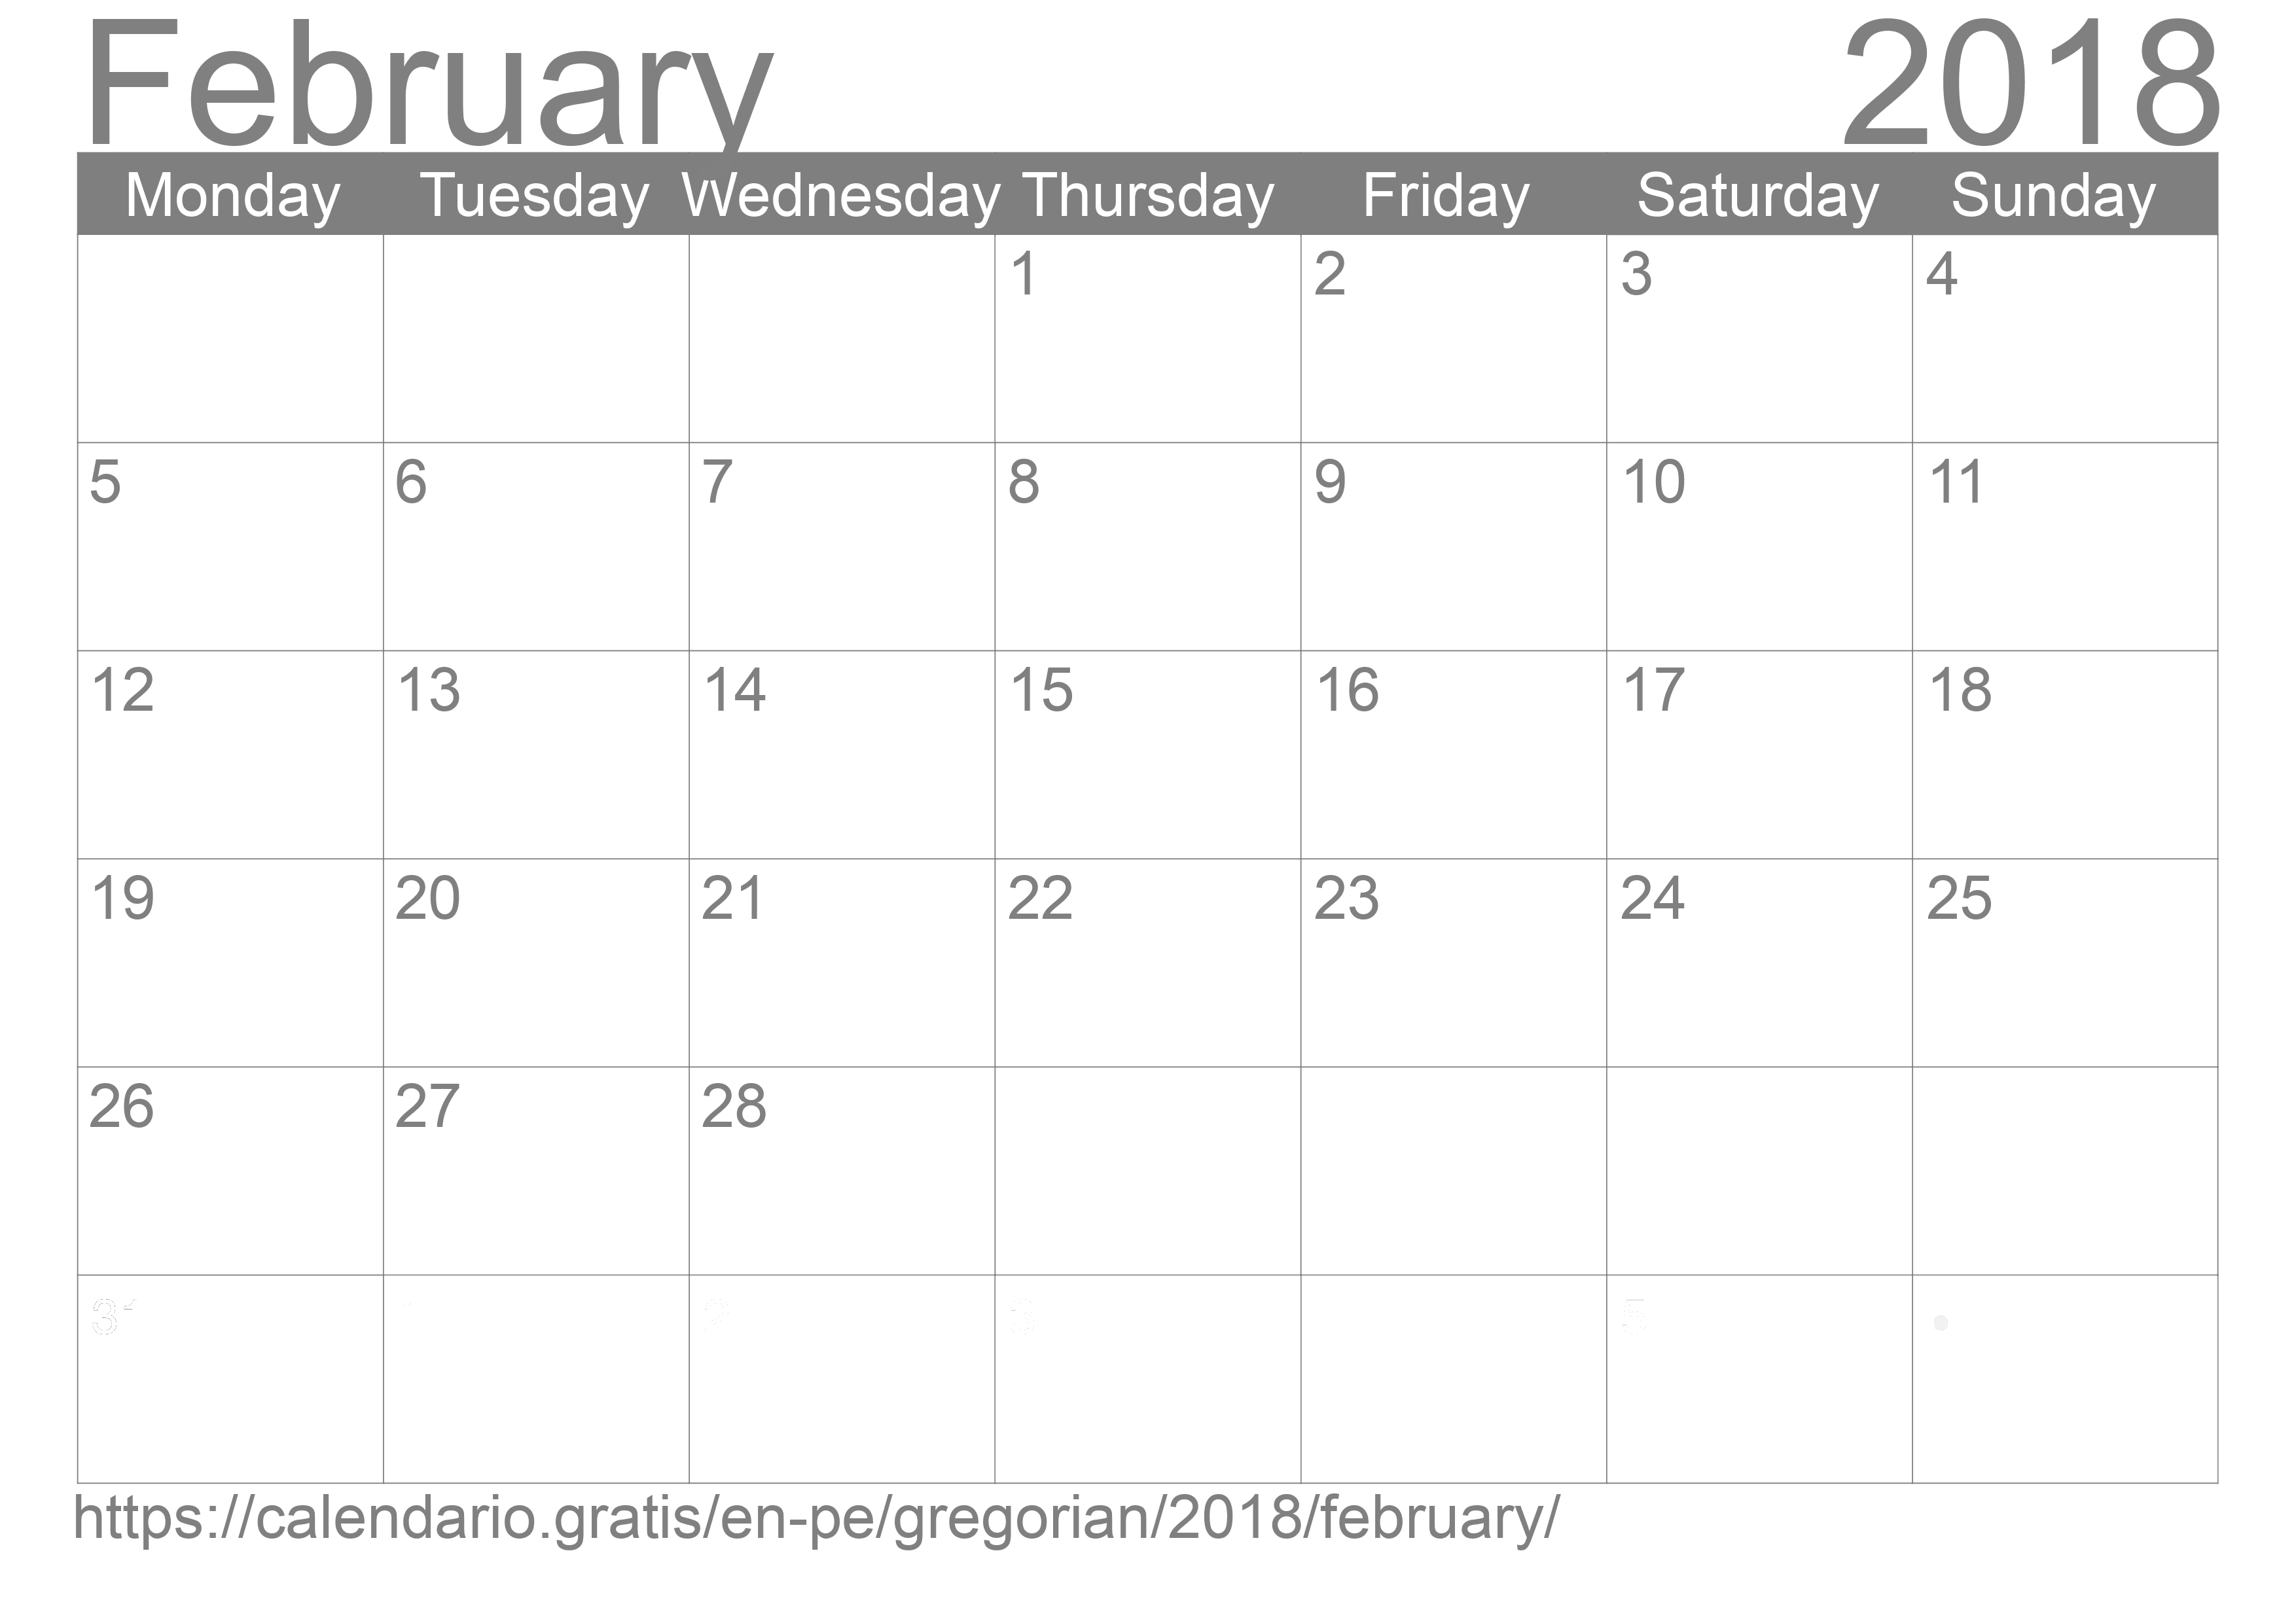 Calendar February 2018 to print